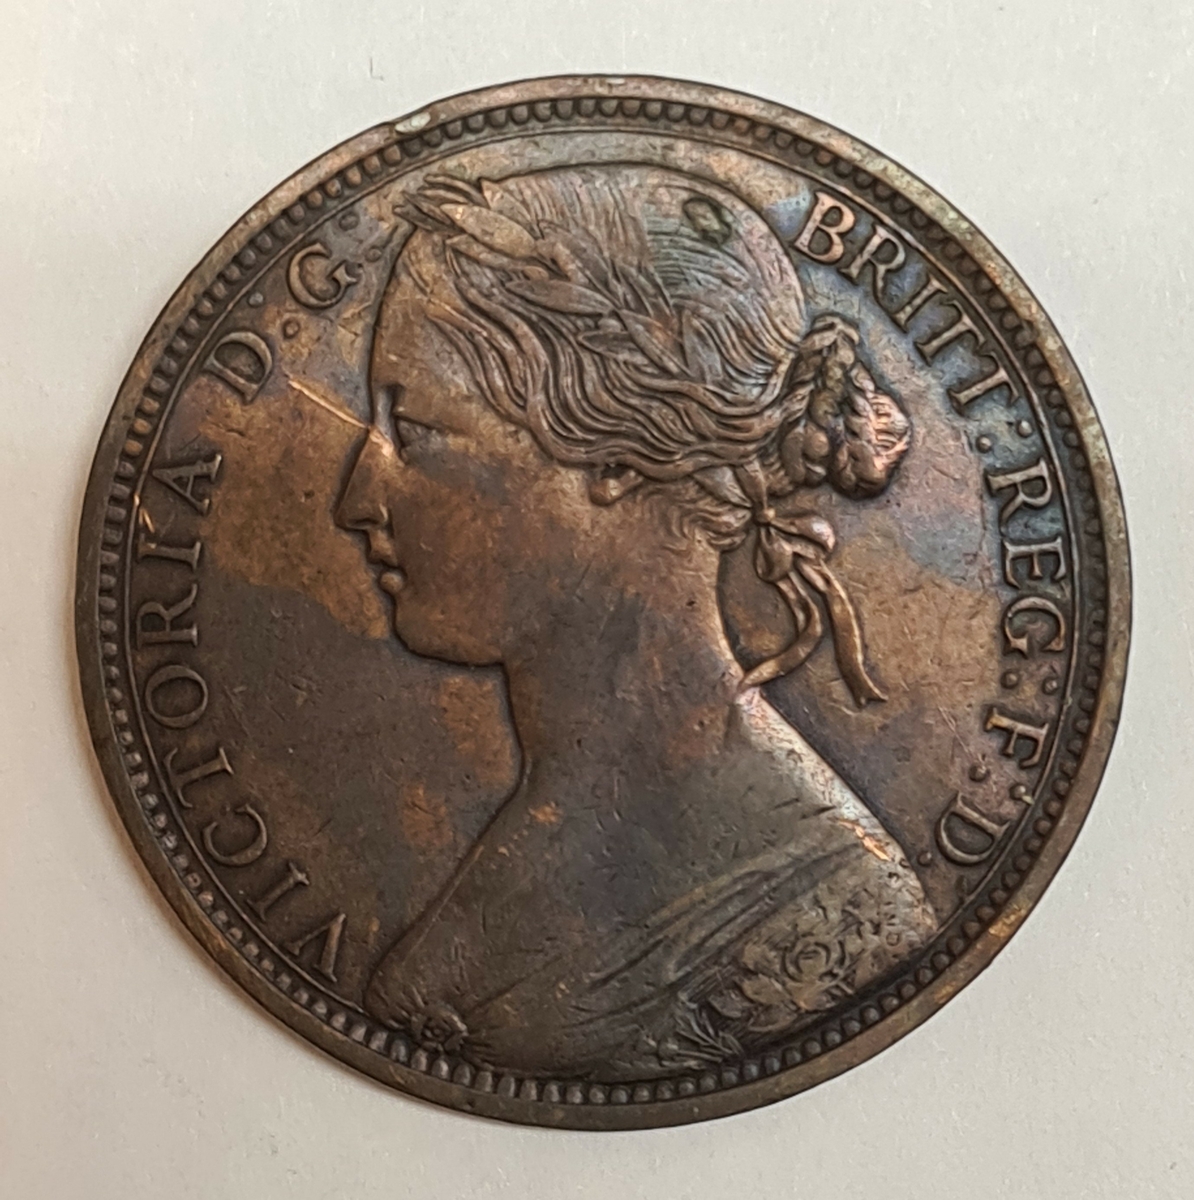 3 mynt från Storbritanien.
1 Penny, 1860
1 Penny, 1863
1 Penny, 1866